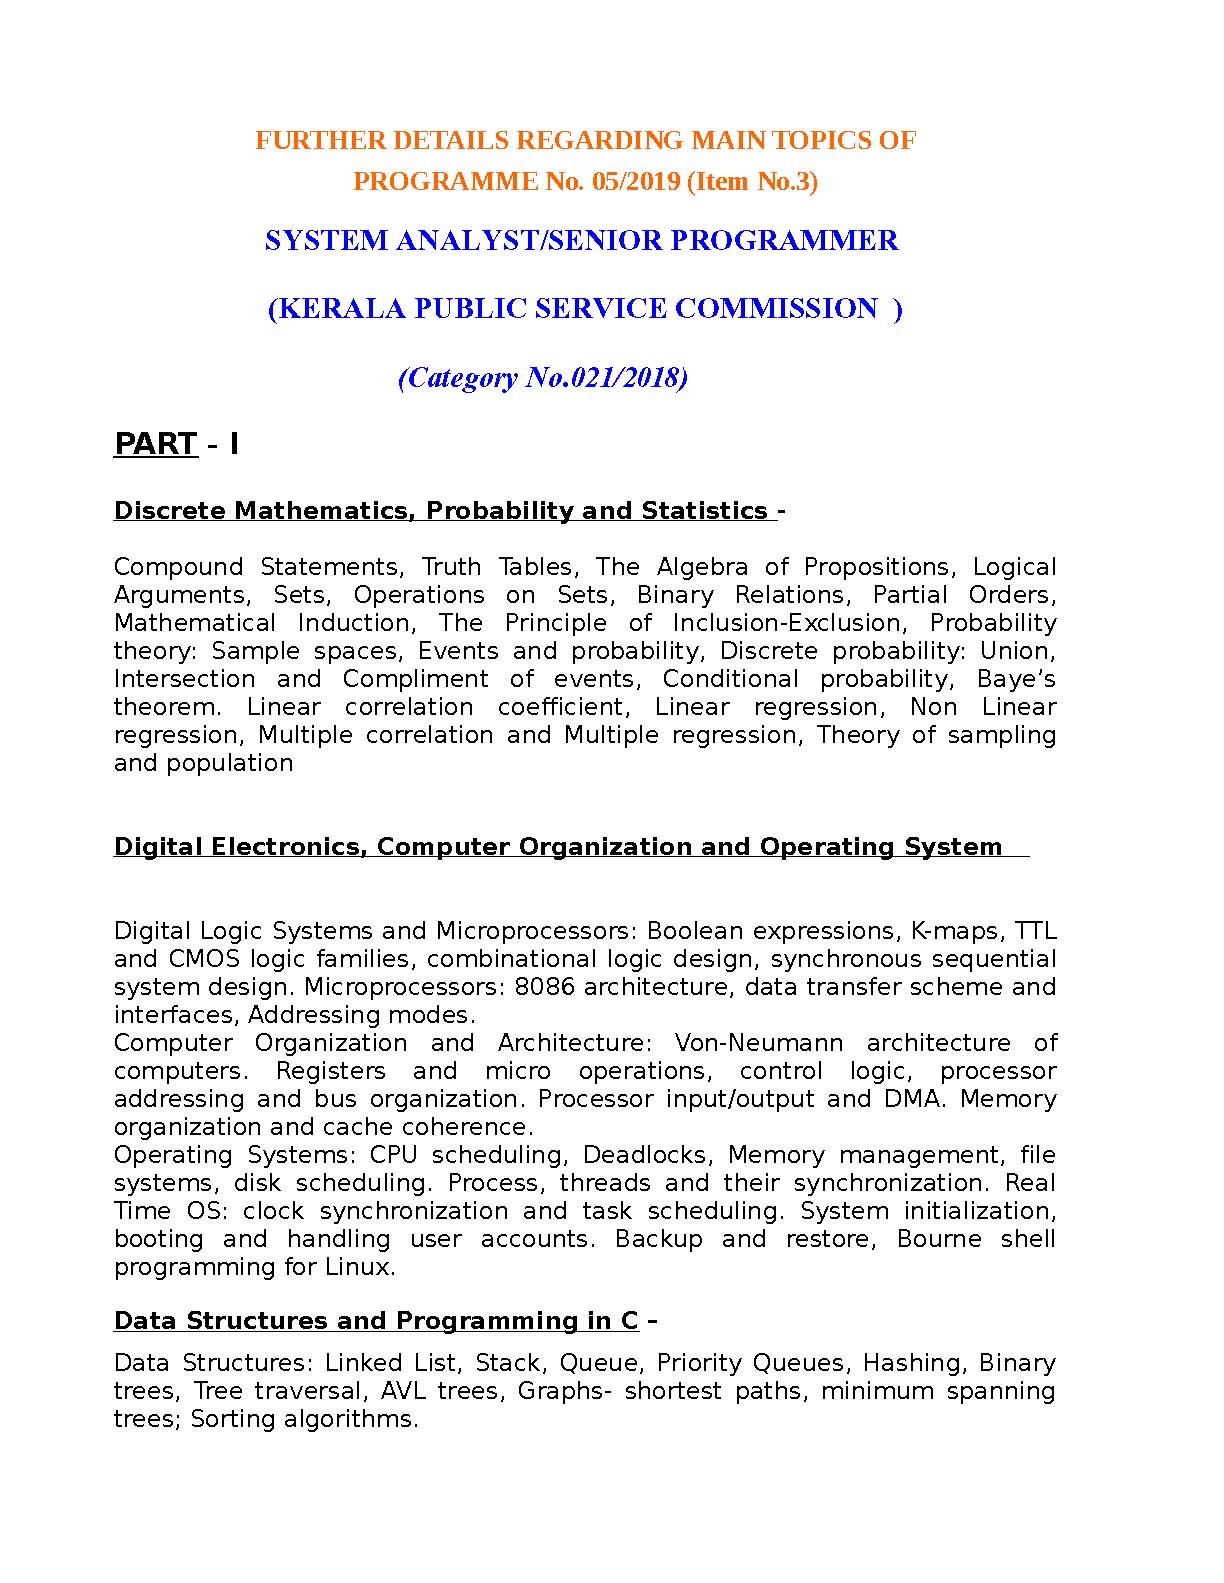 KPSC Exam Syllabus 2019 System Analyst or Senior Programmer - Notification Image 1